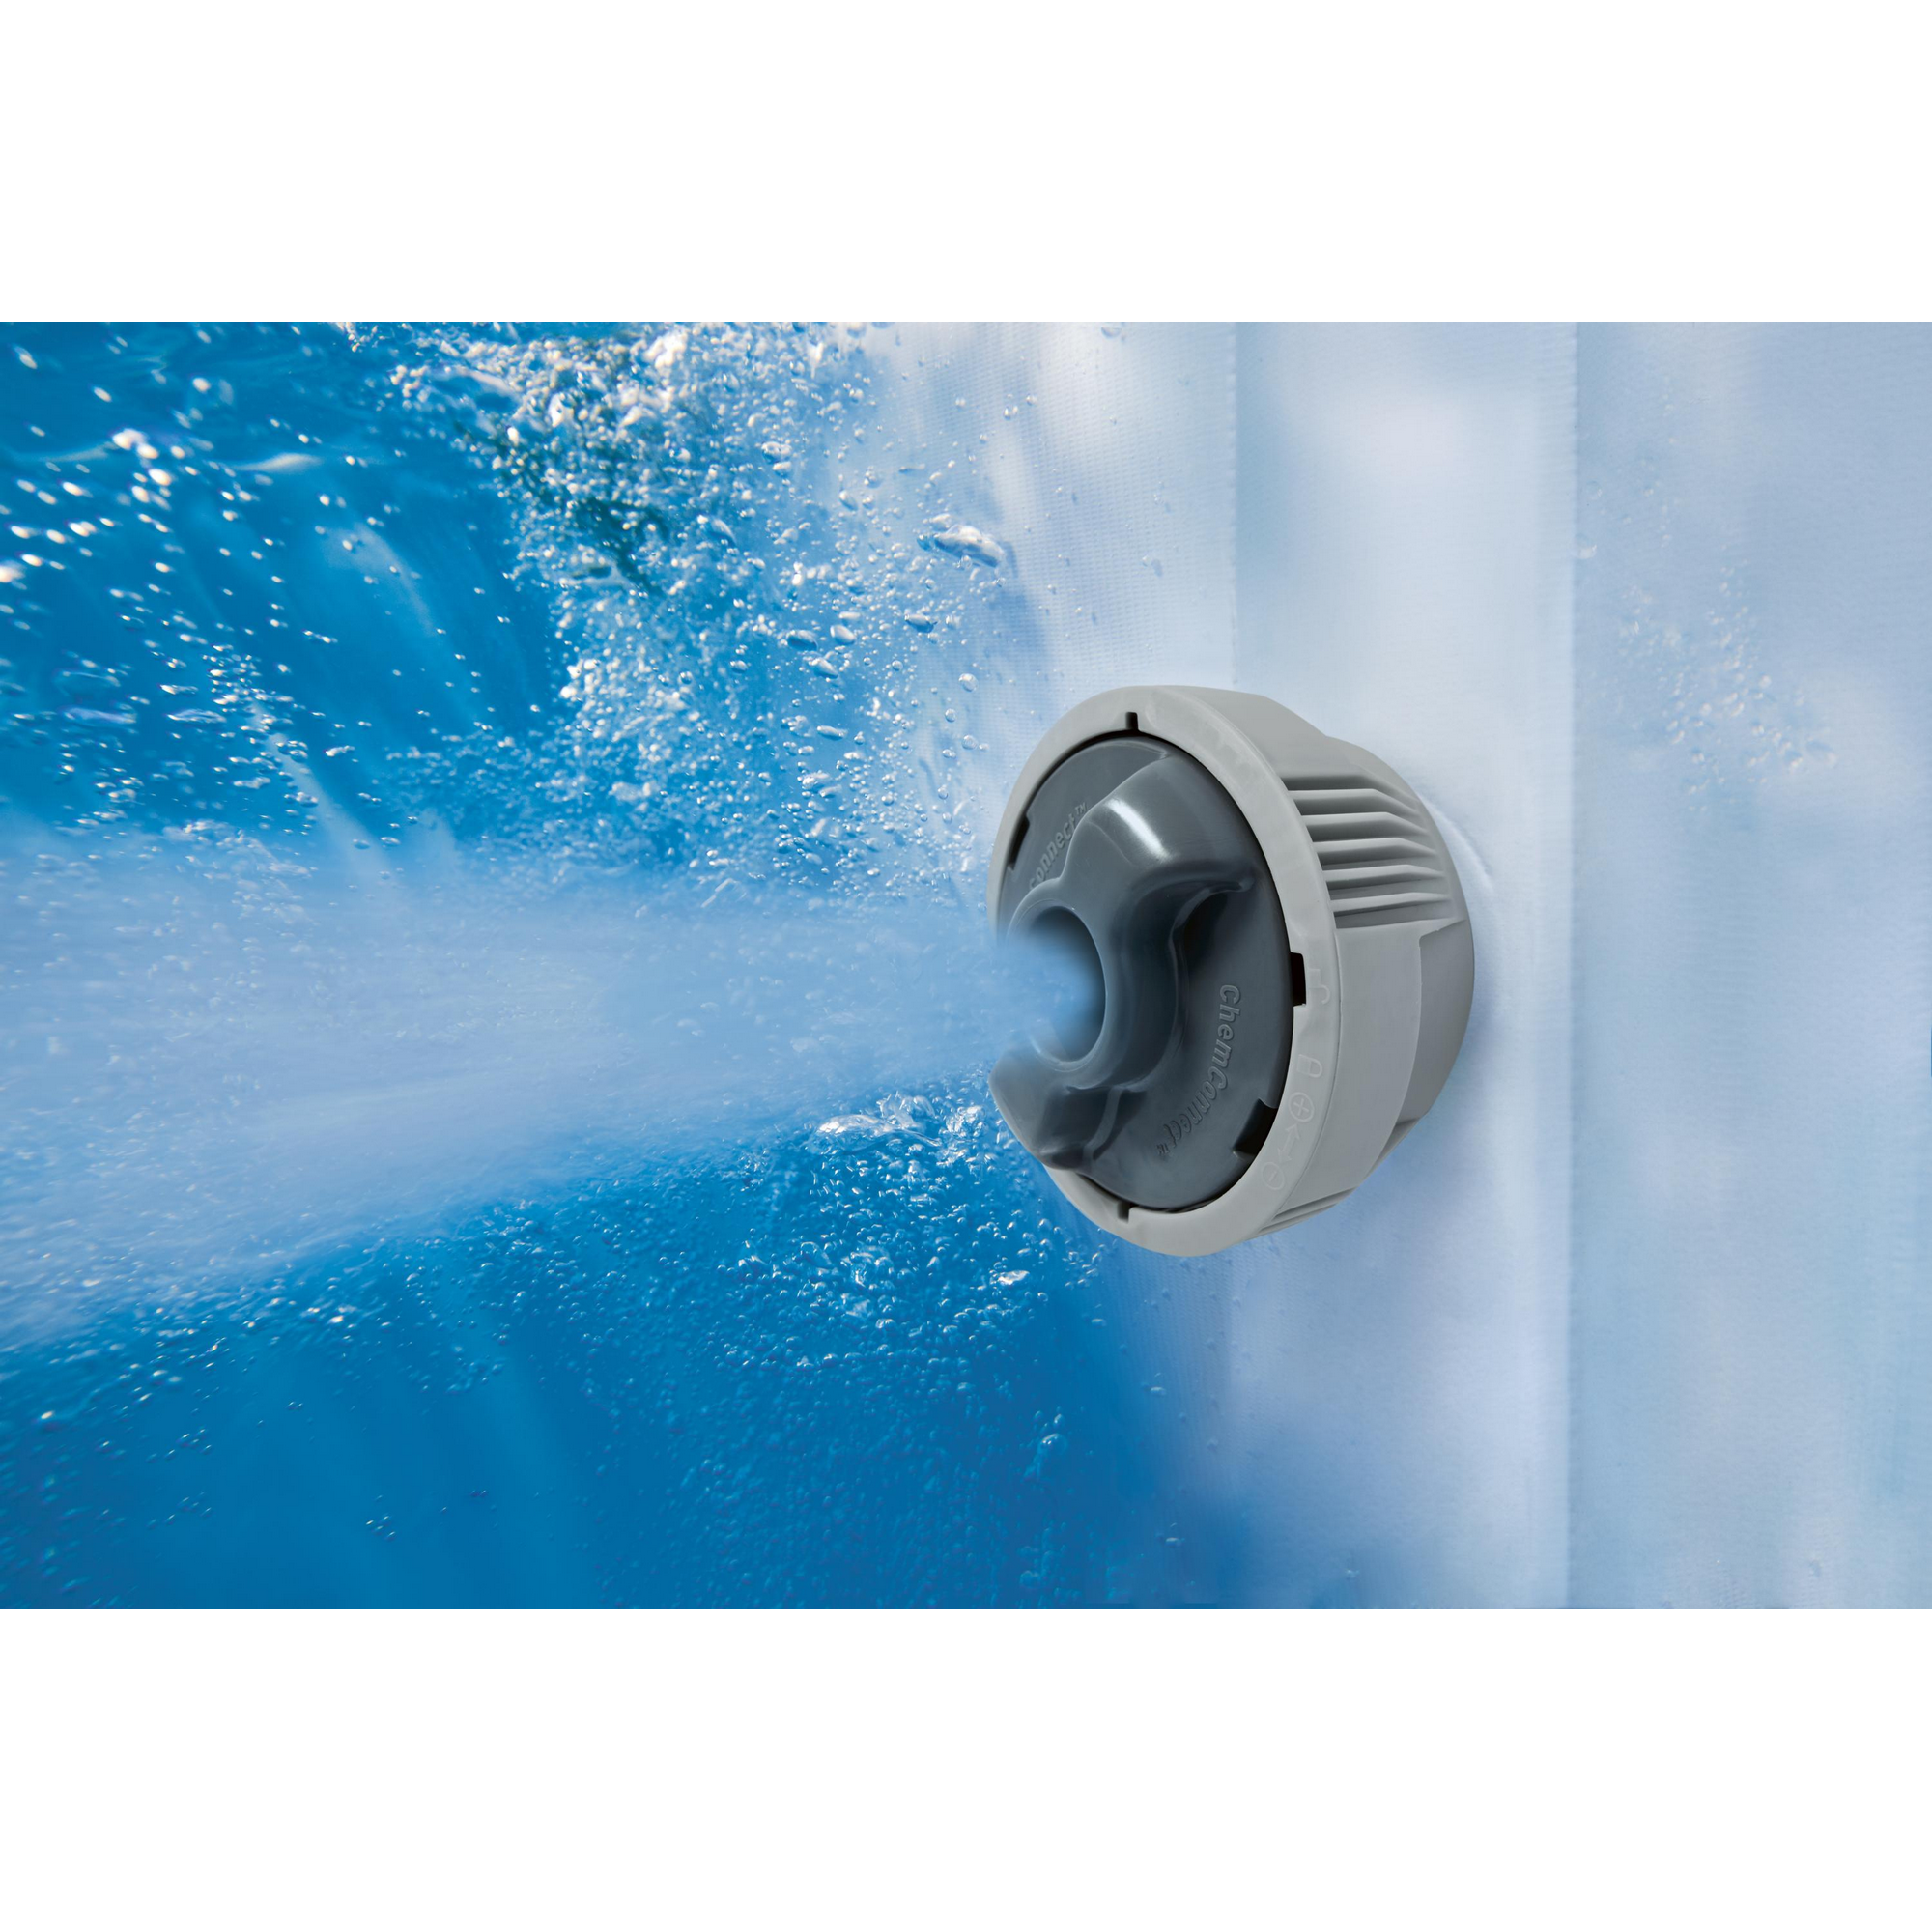 Whirlpool 'Lay-Z-Spa™ Hawaii HydroJet Pro' grau/weiß 180 x 180 x 71 cm + product picture